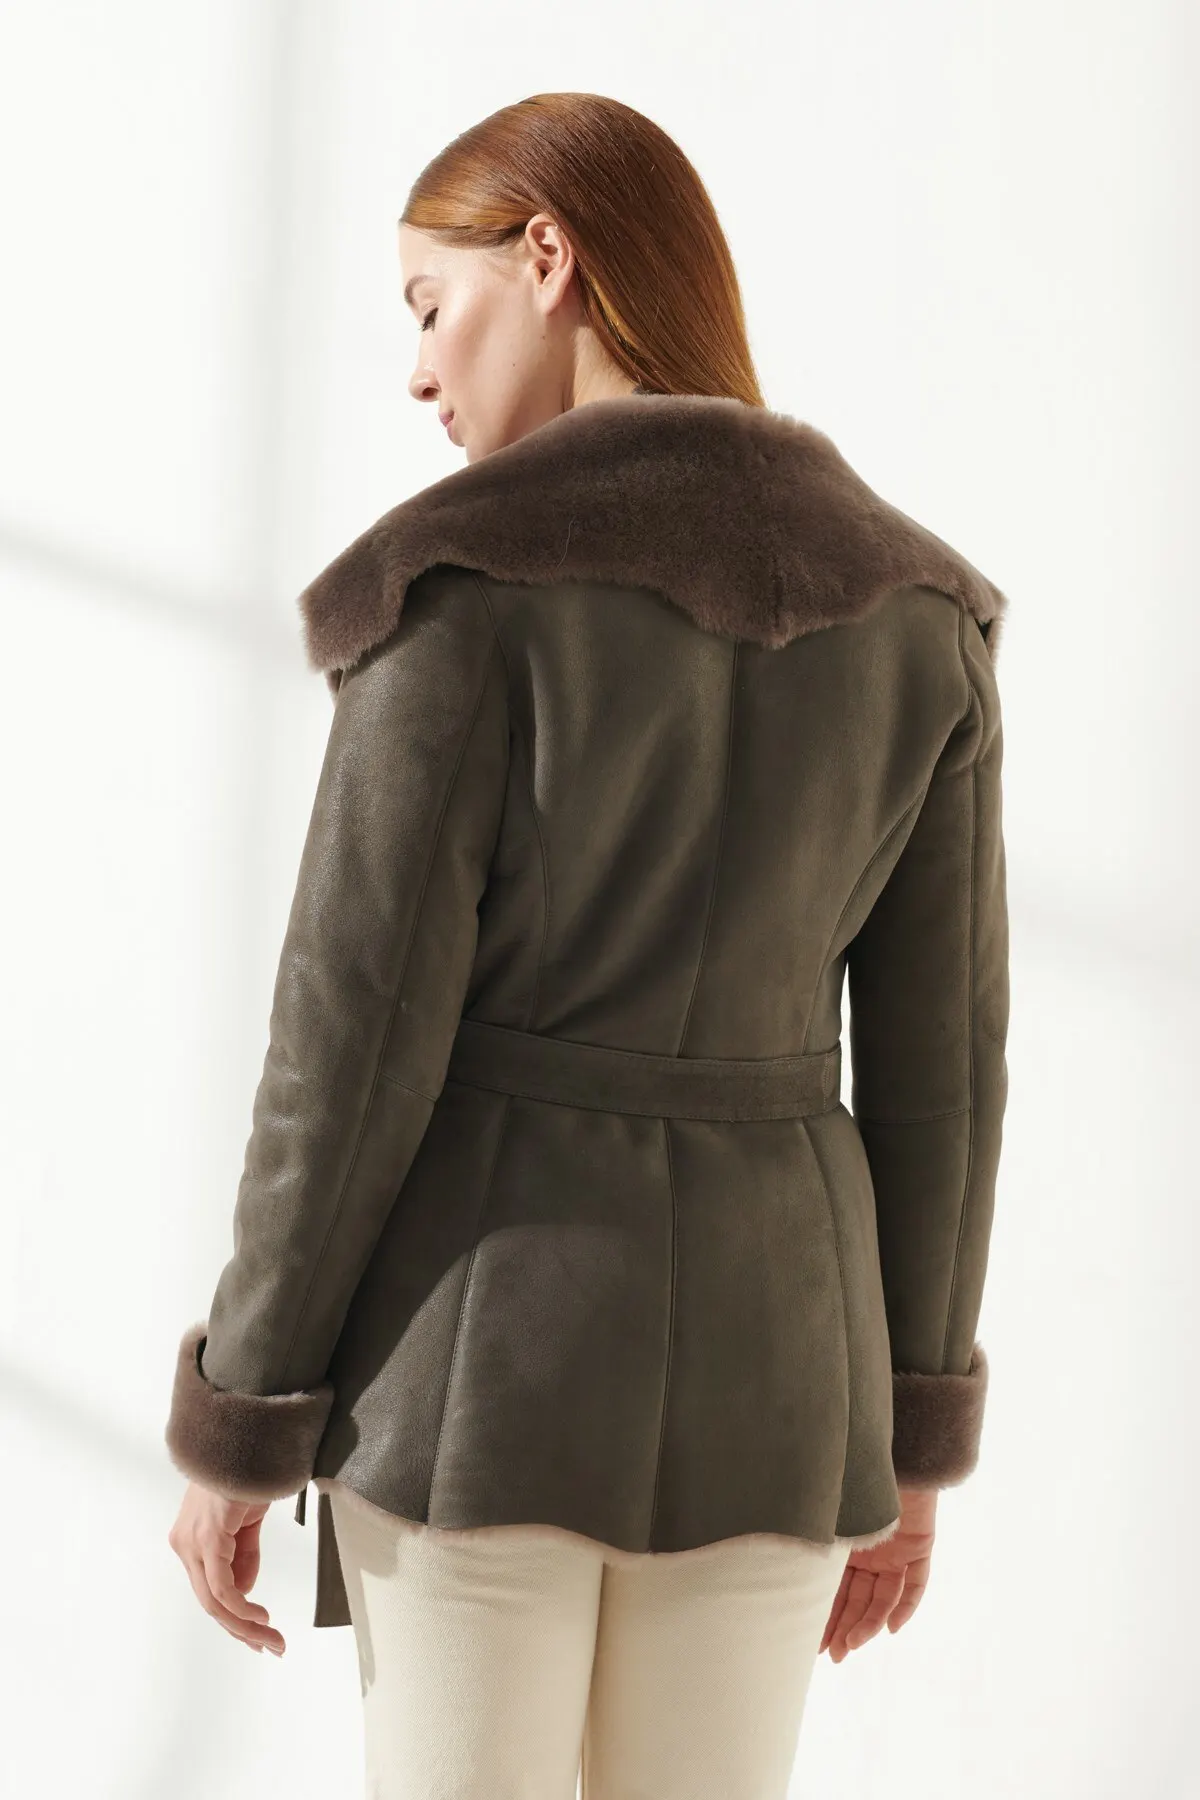 Women's Sports Gray Furry Leather Coat Winterwear Thick Montlar Keeps Warm Soft Genuine Sheepskin Turkiyede Produced New Street Fashion enlarge